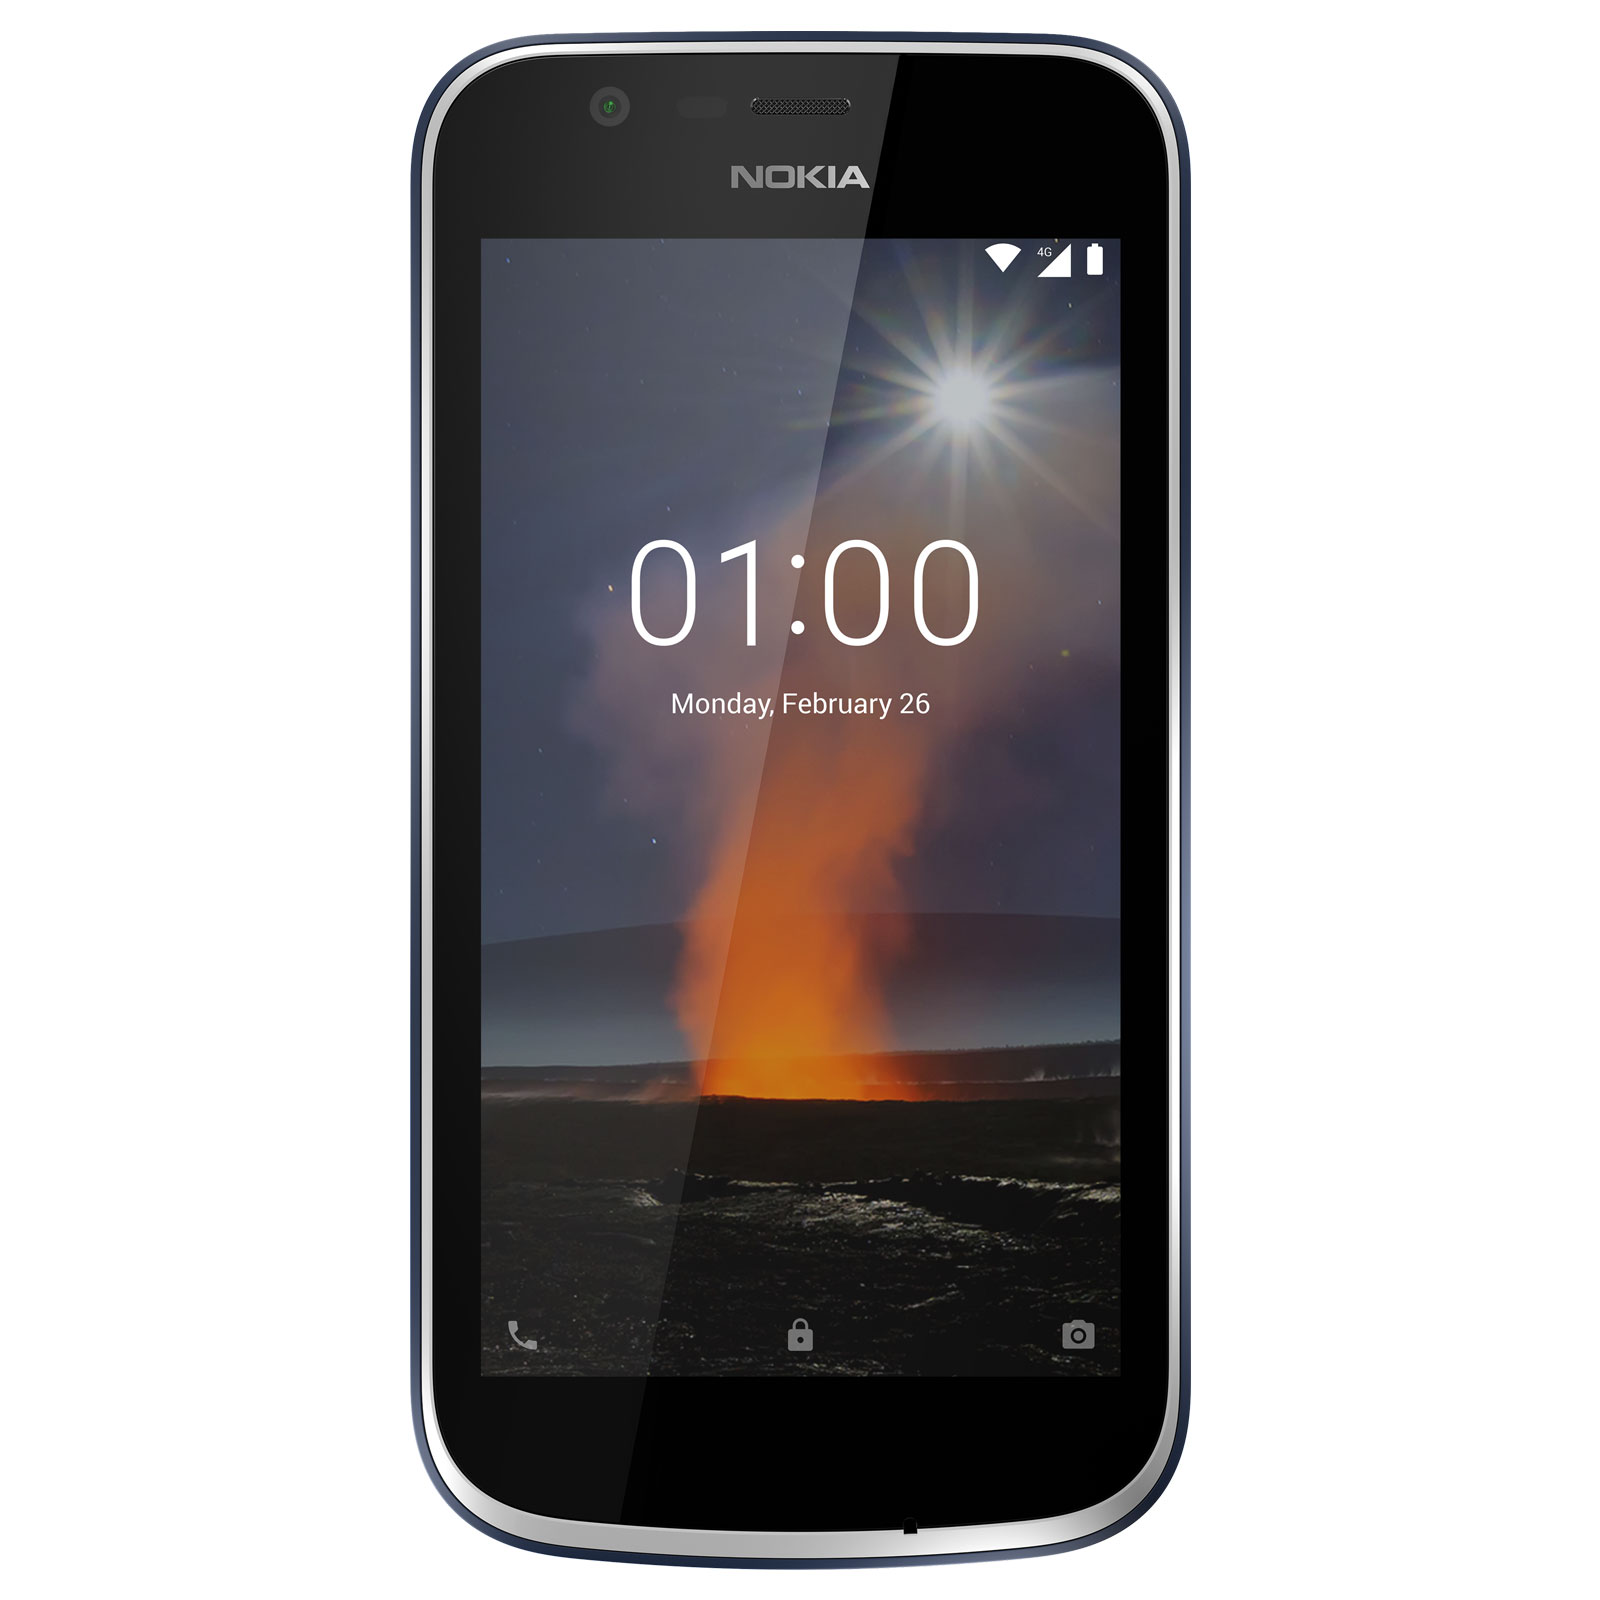 Nokia, Nokia 6.1, Nokia Smartphones, Finnish company, HMD Global, Android 9 Pie, Gadget news, Smartphone and mobile news